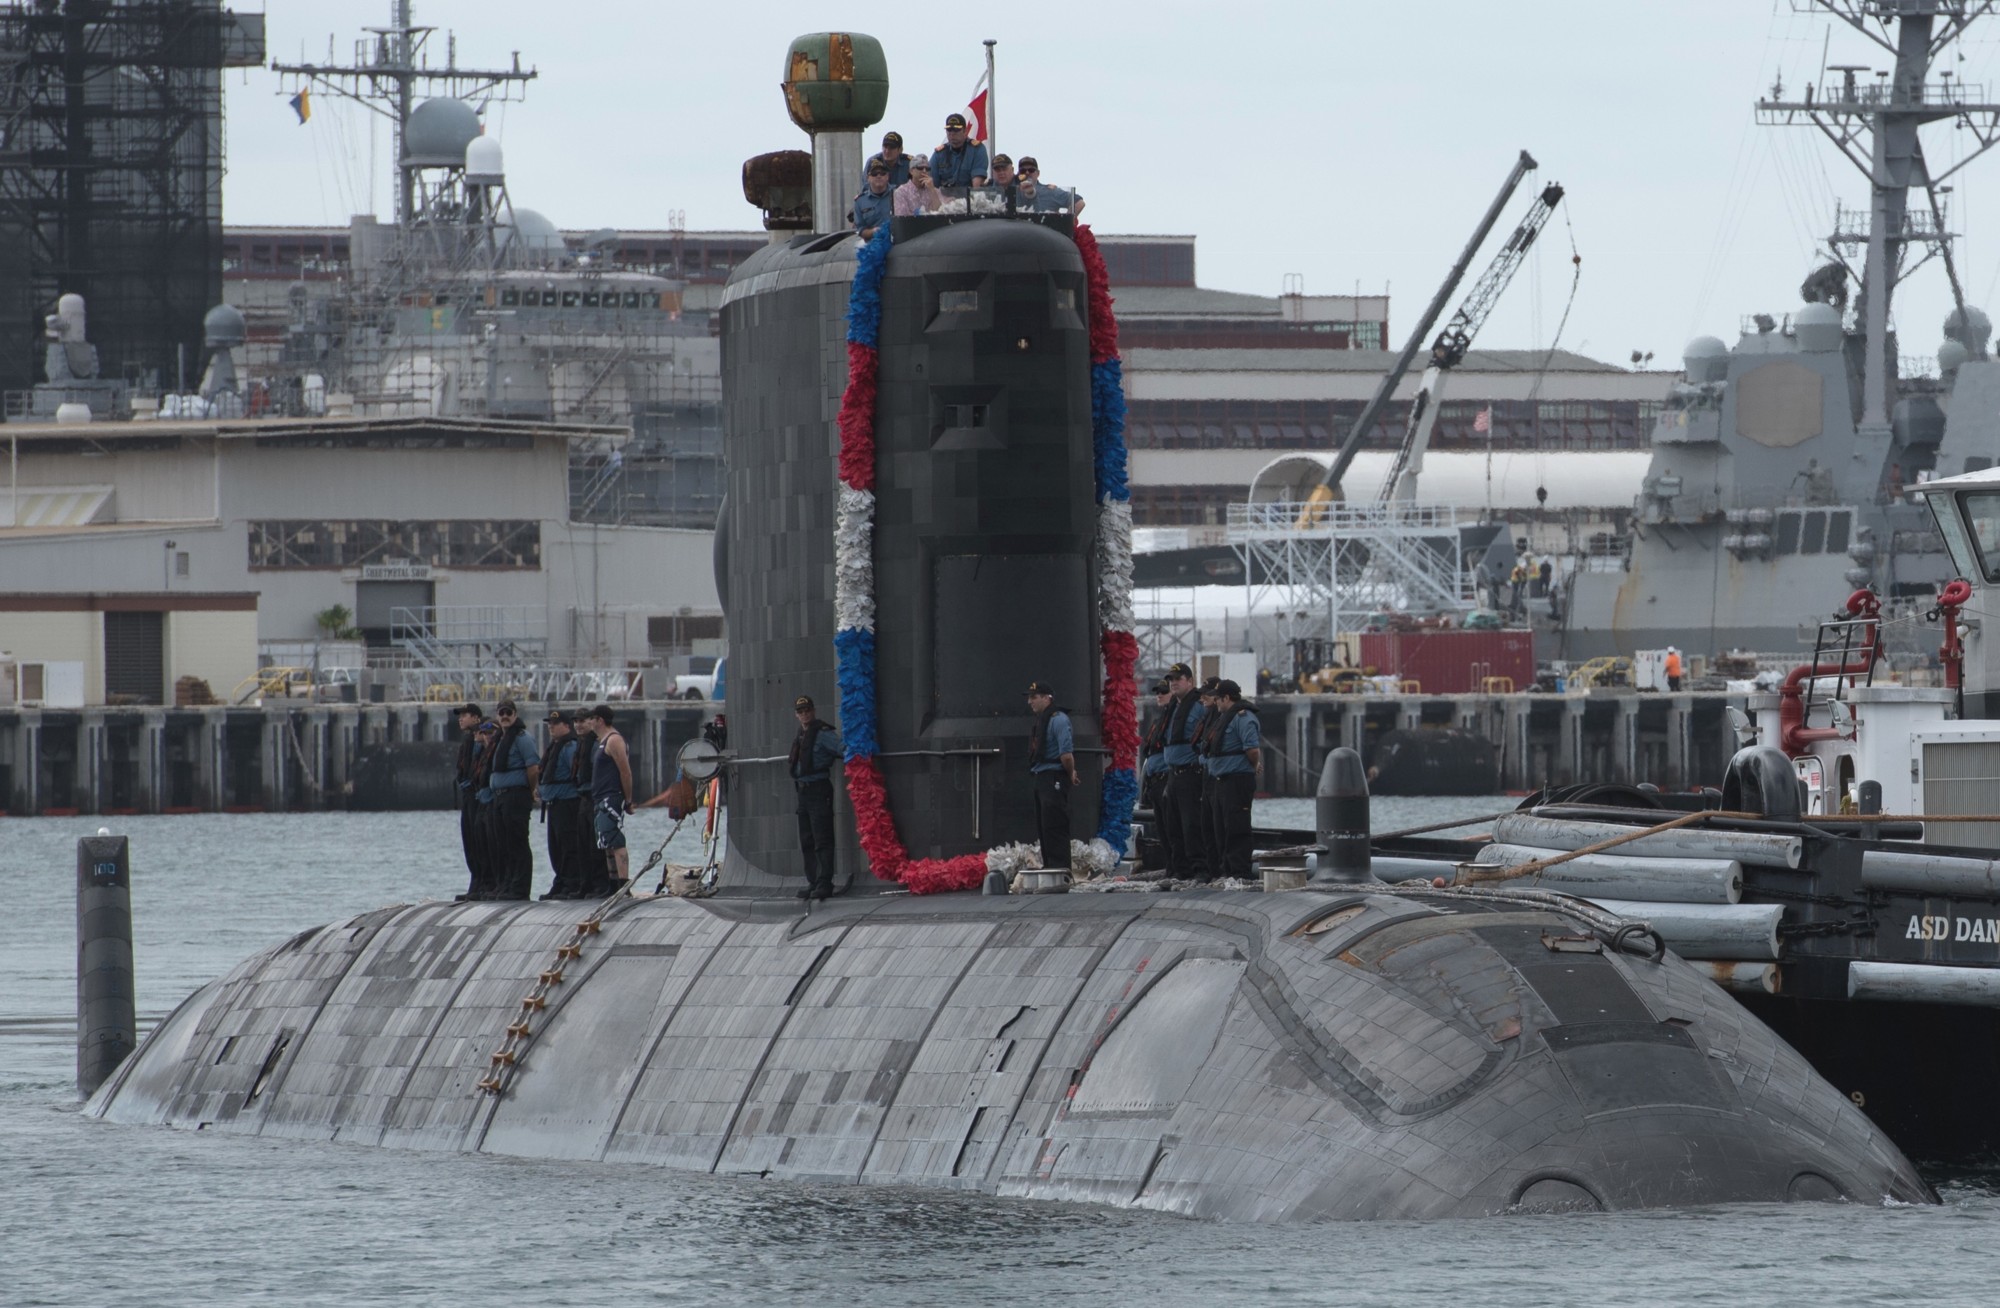 ssk-879 hmcs chicoutimi victoria upholder class patrol submarine ncsm royal canadian navy 12x vickers vsel cfb esquimalt